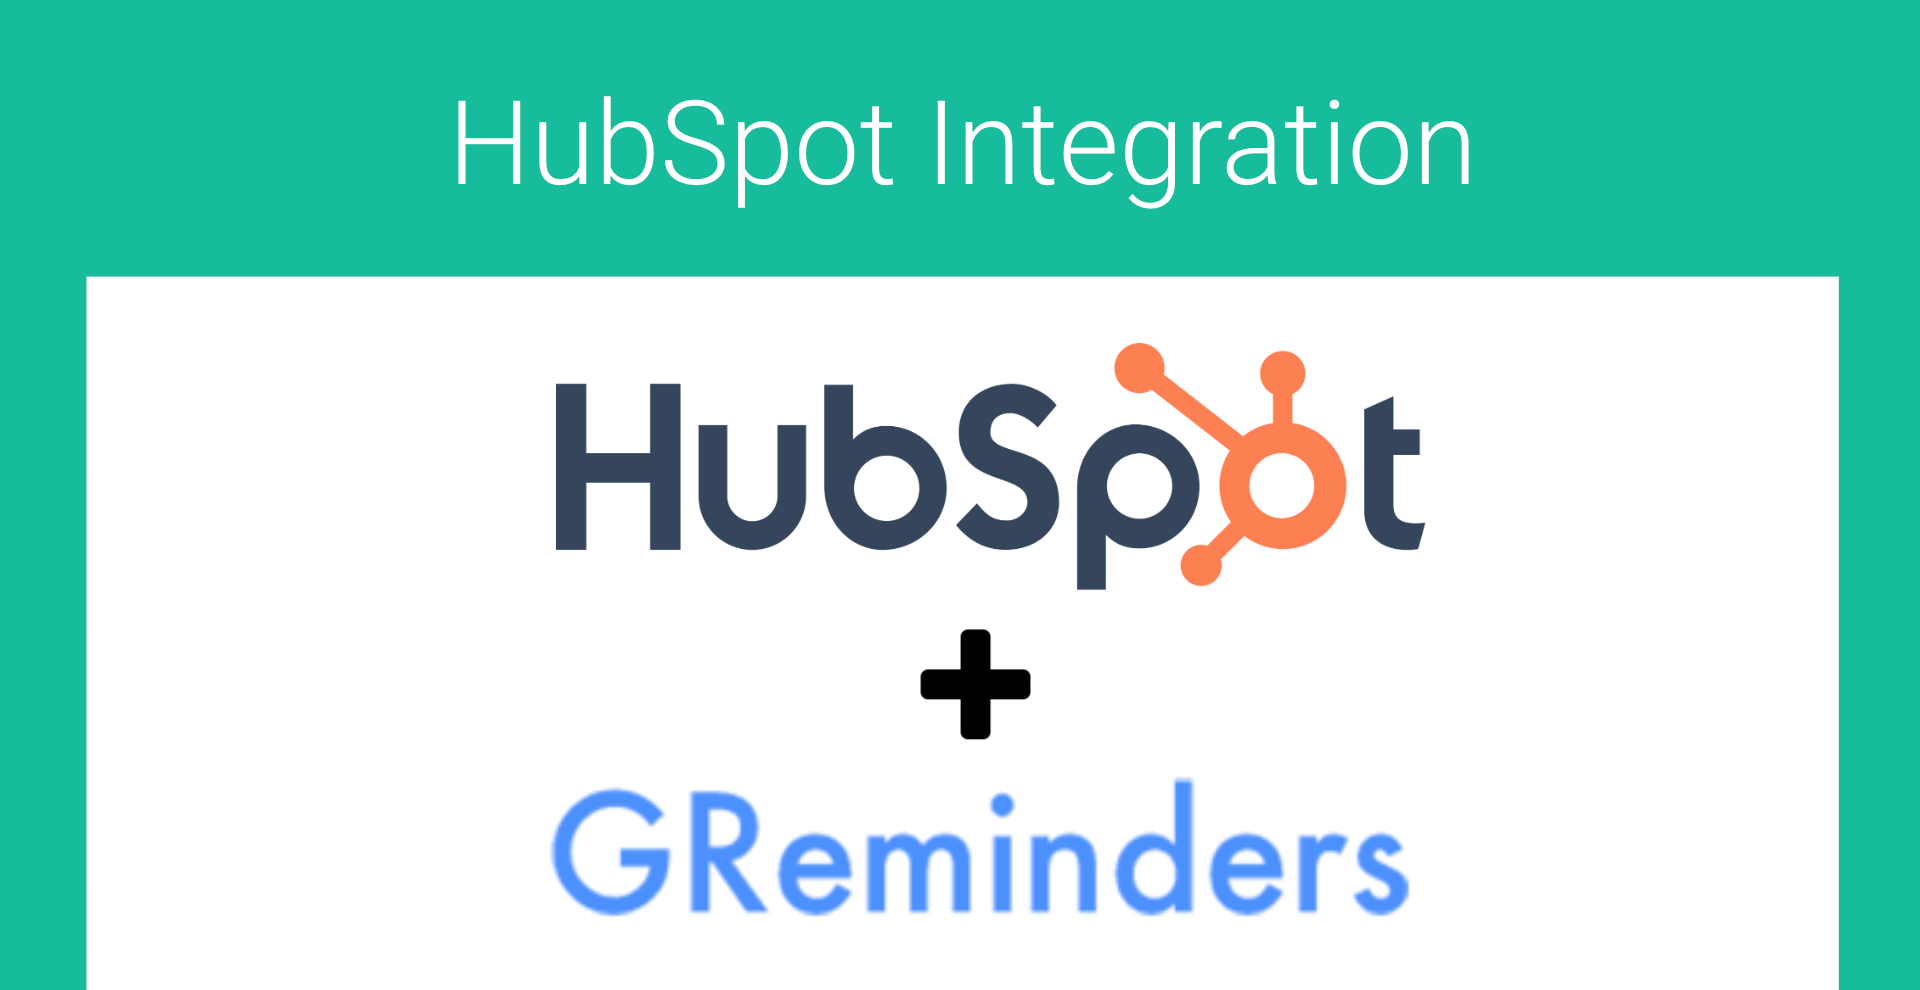 HubSpot SMS Reminder Automation